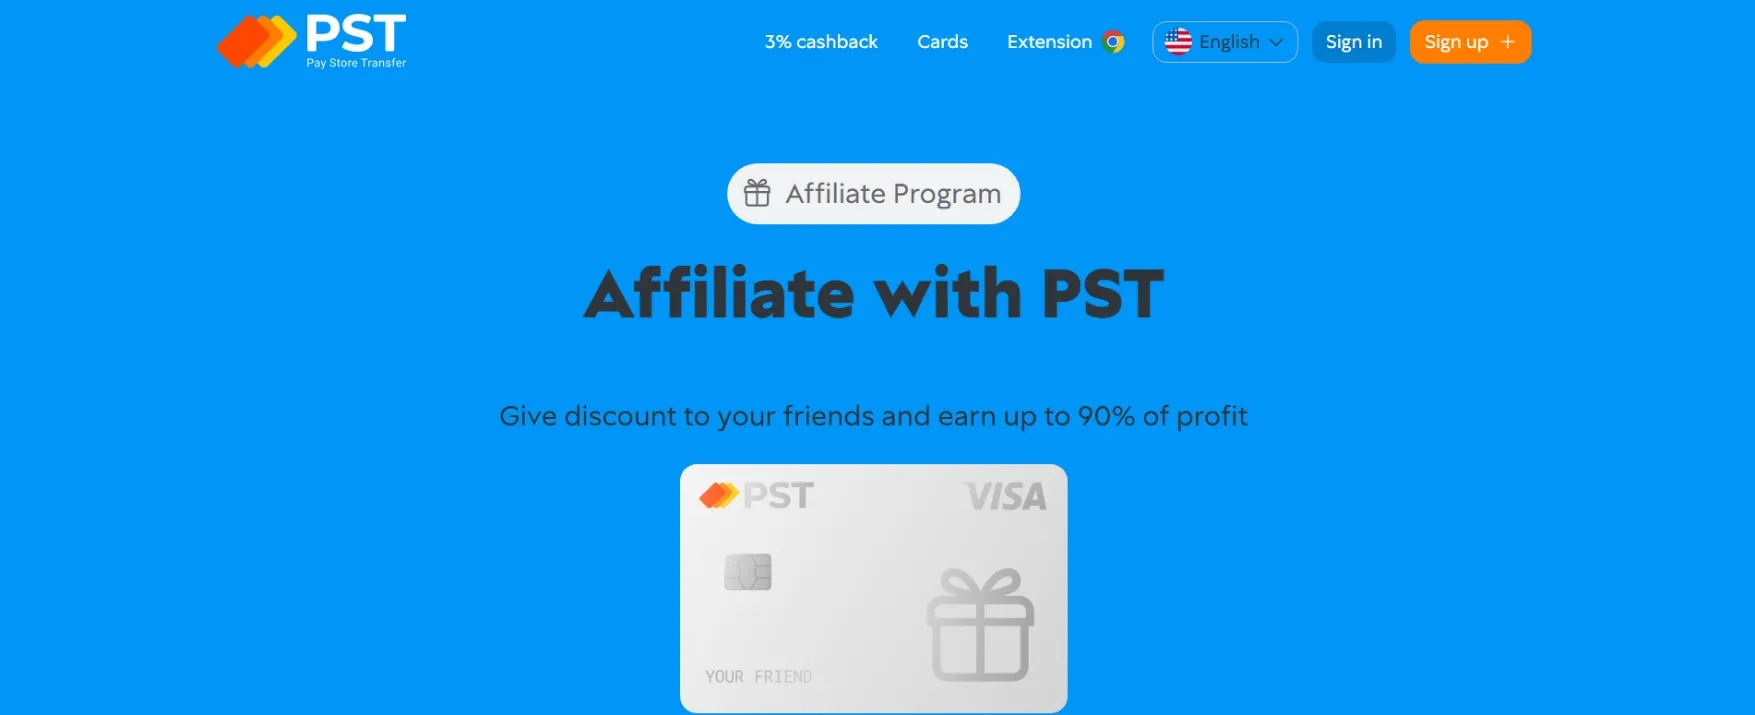 Affiliate Program by PST.NET